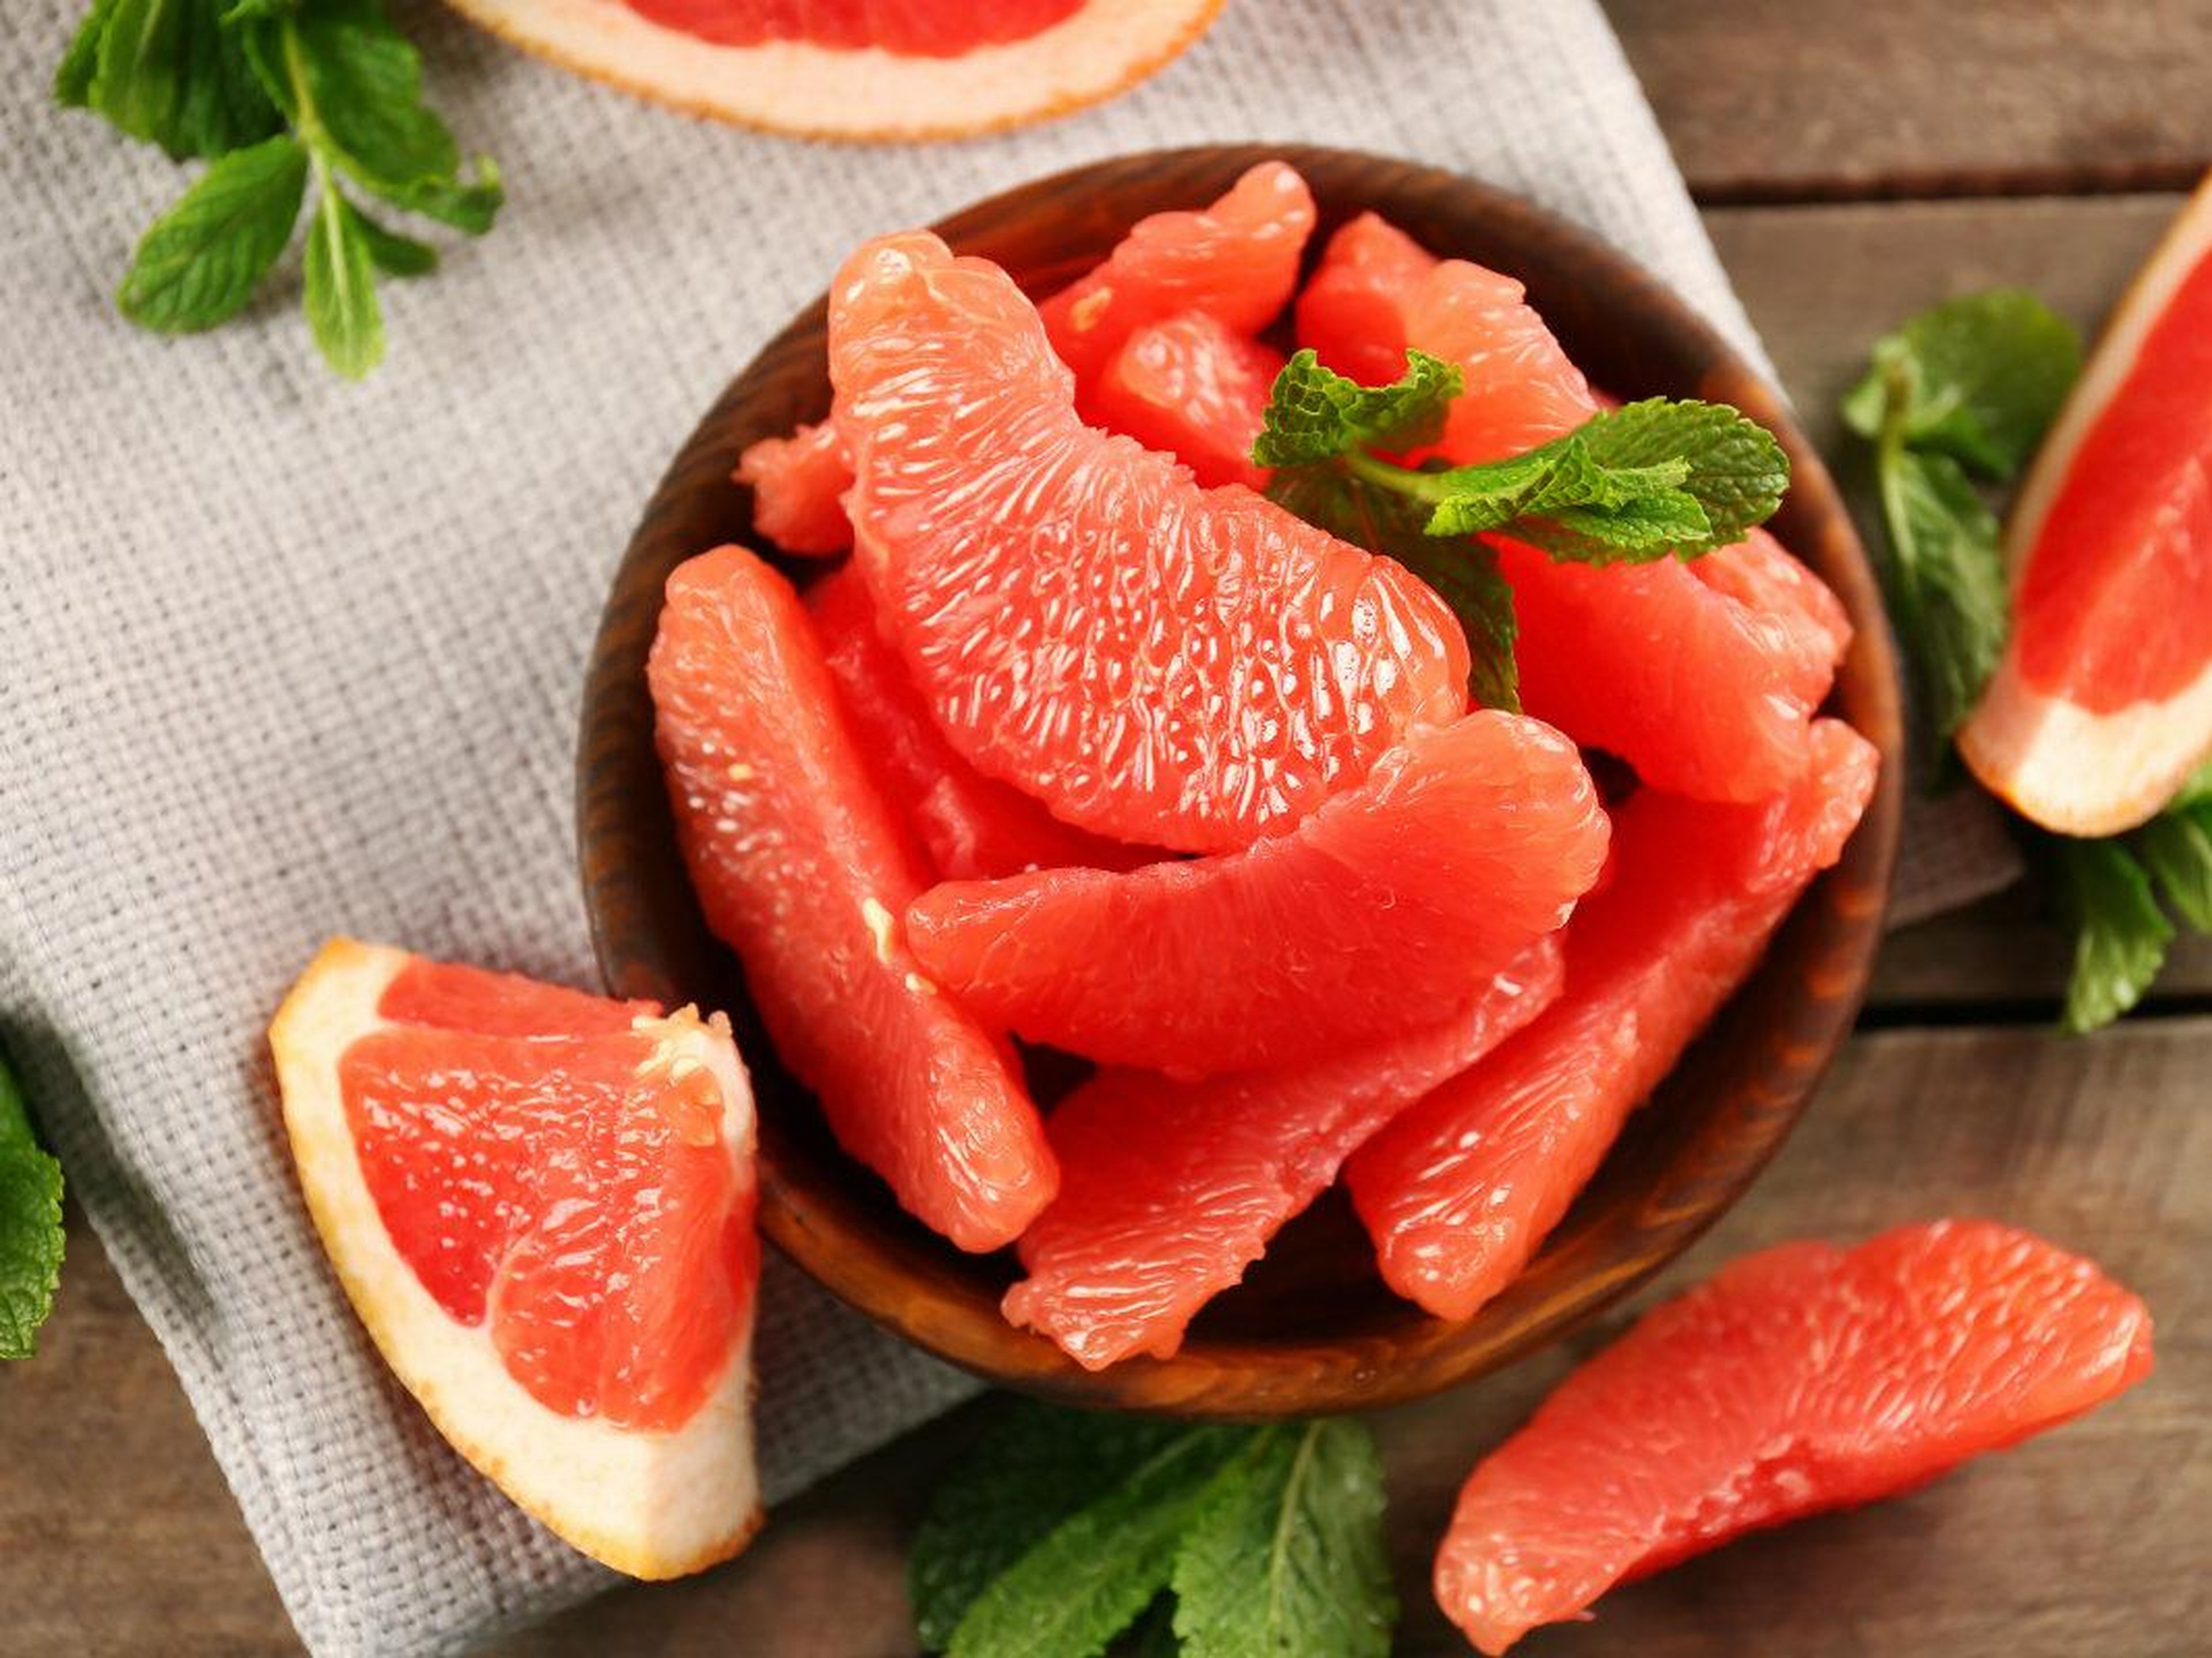 Grapefruit is a good source of vitamin C as well as potassium, pectin, and fiber.